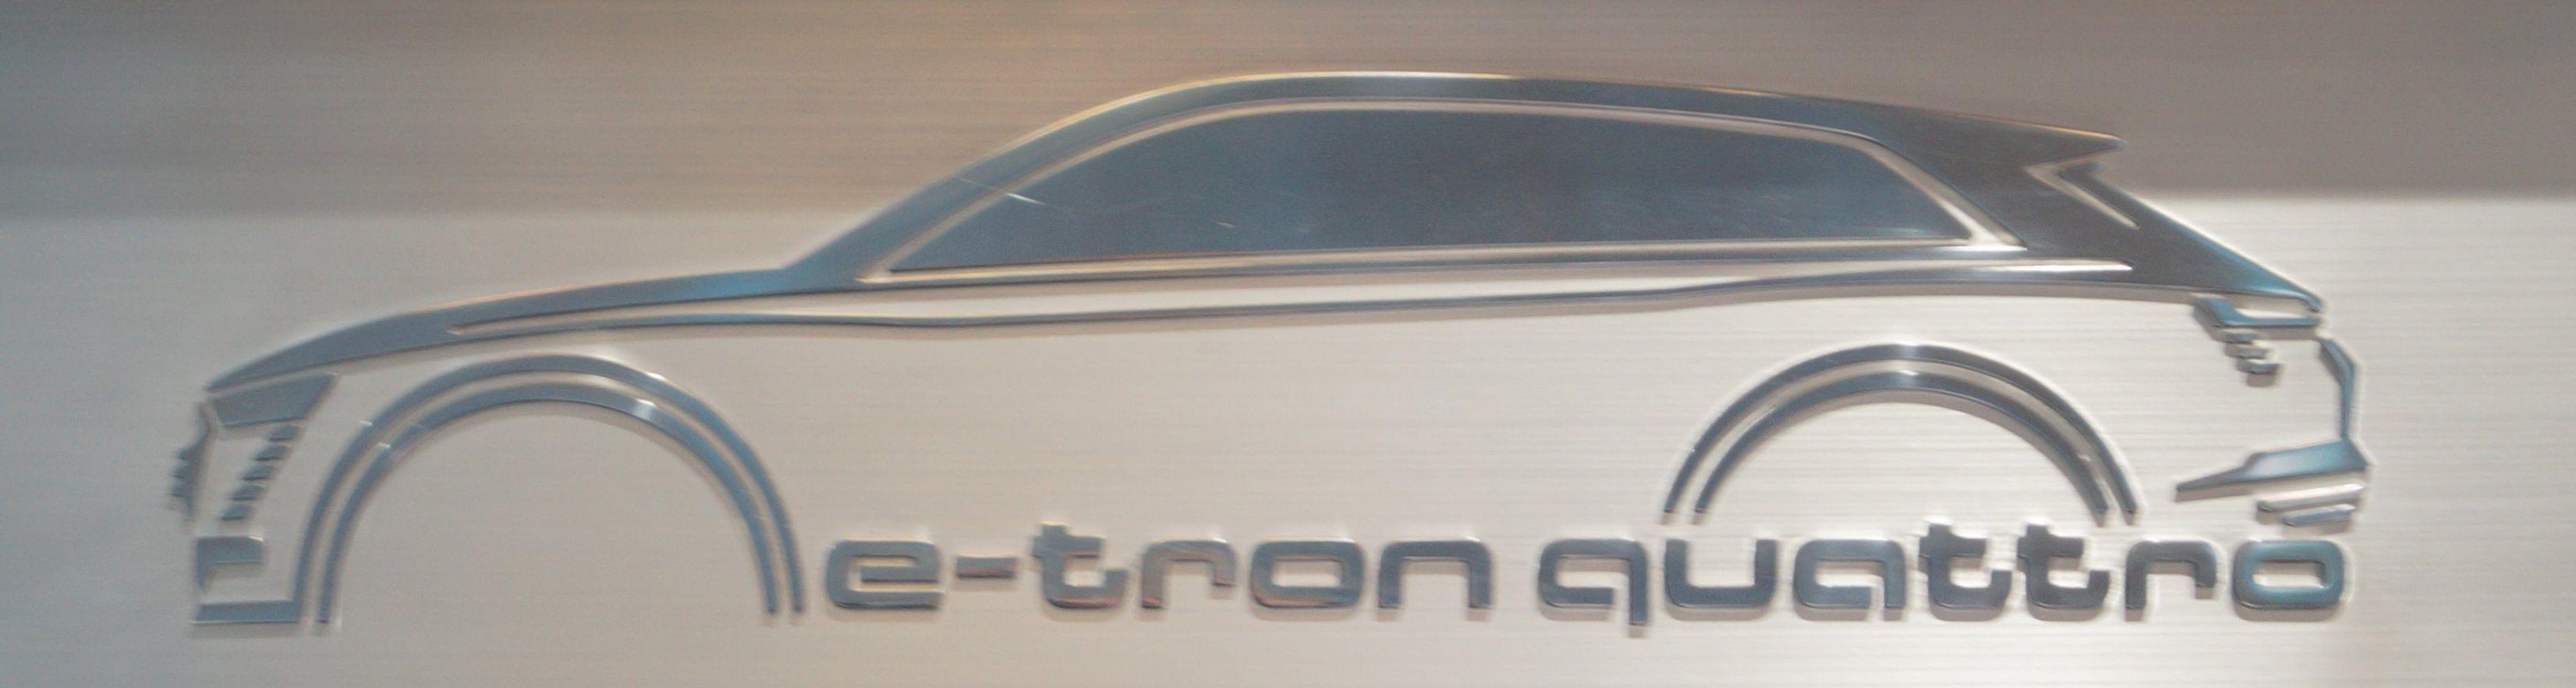 E-Tron Logo - File:Audi Quattro e-tron - logo (MSP16).jpg - Wikimedia Commons